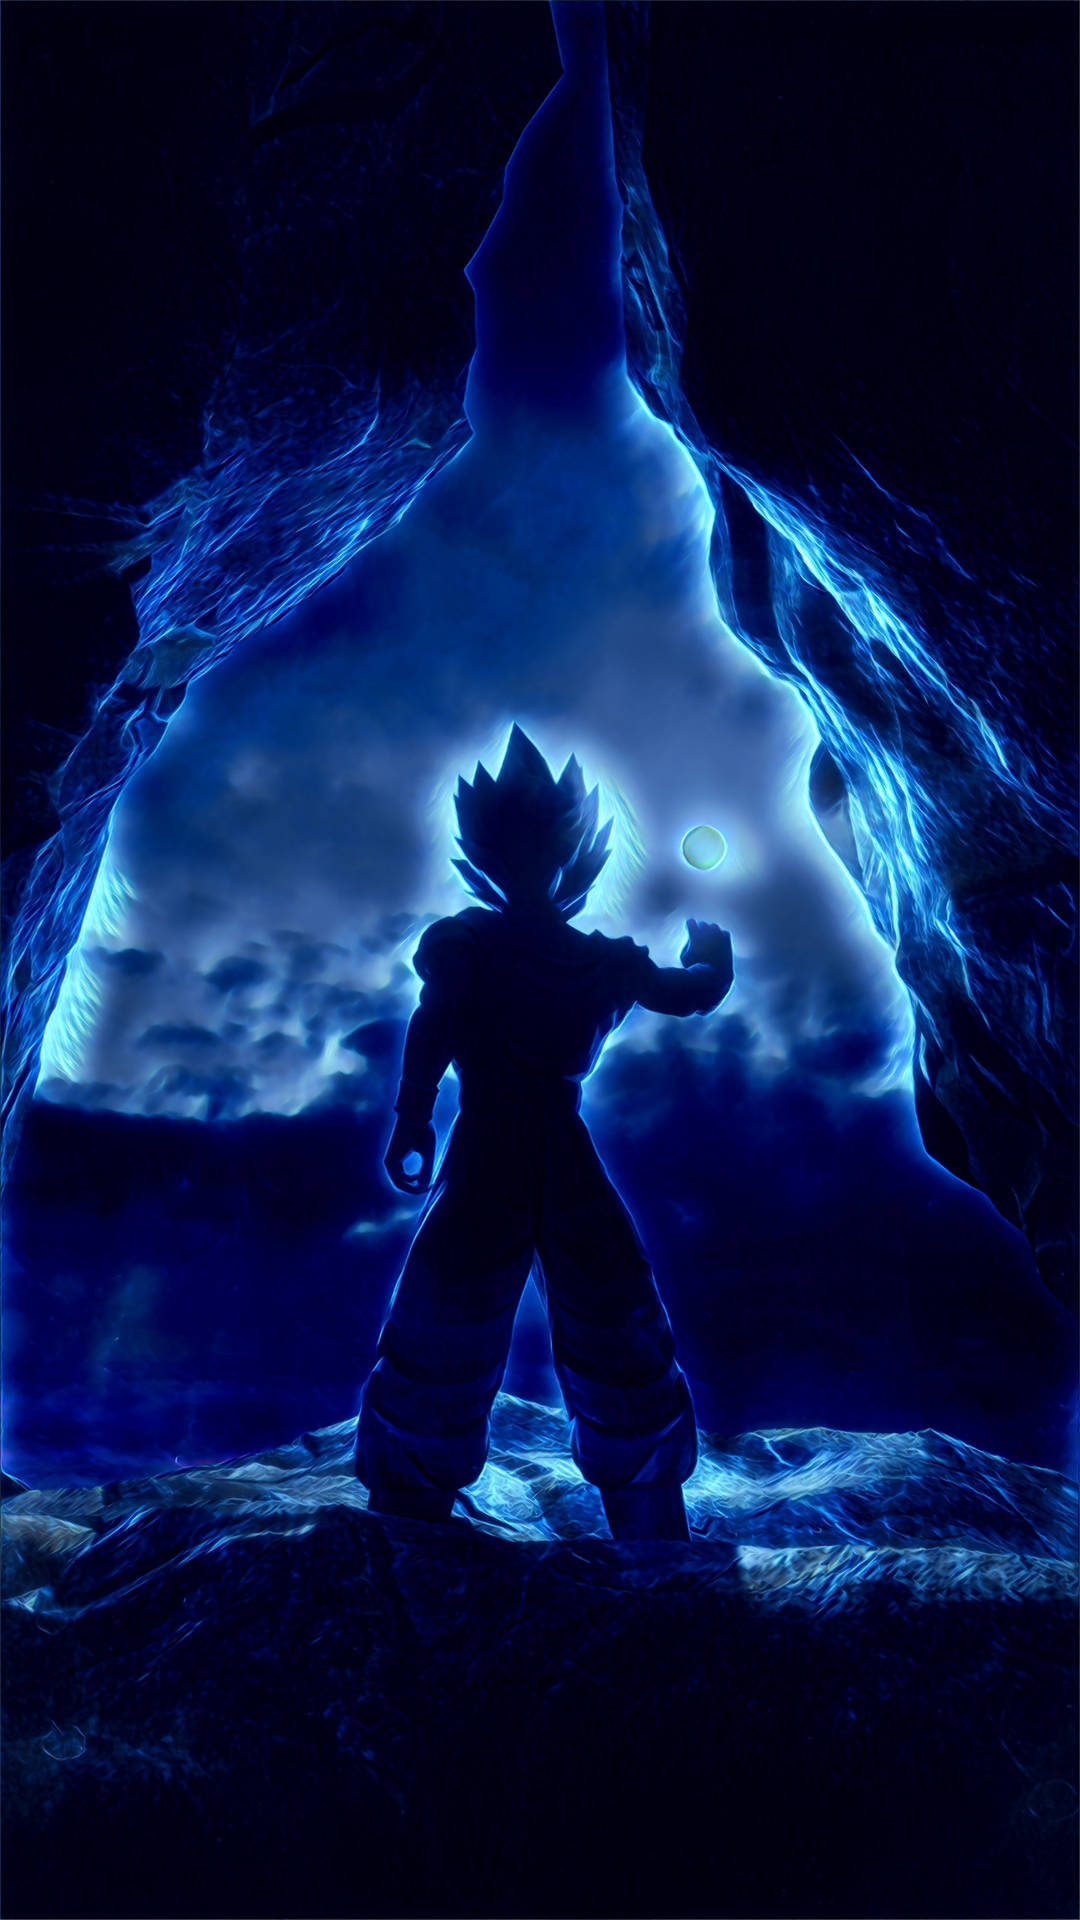 Super Saiyan Goku - The Ultimate Warrior Of Dbz In 4k